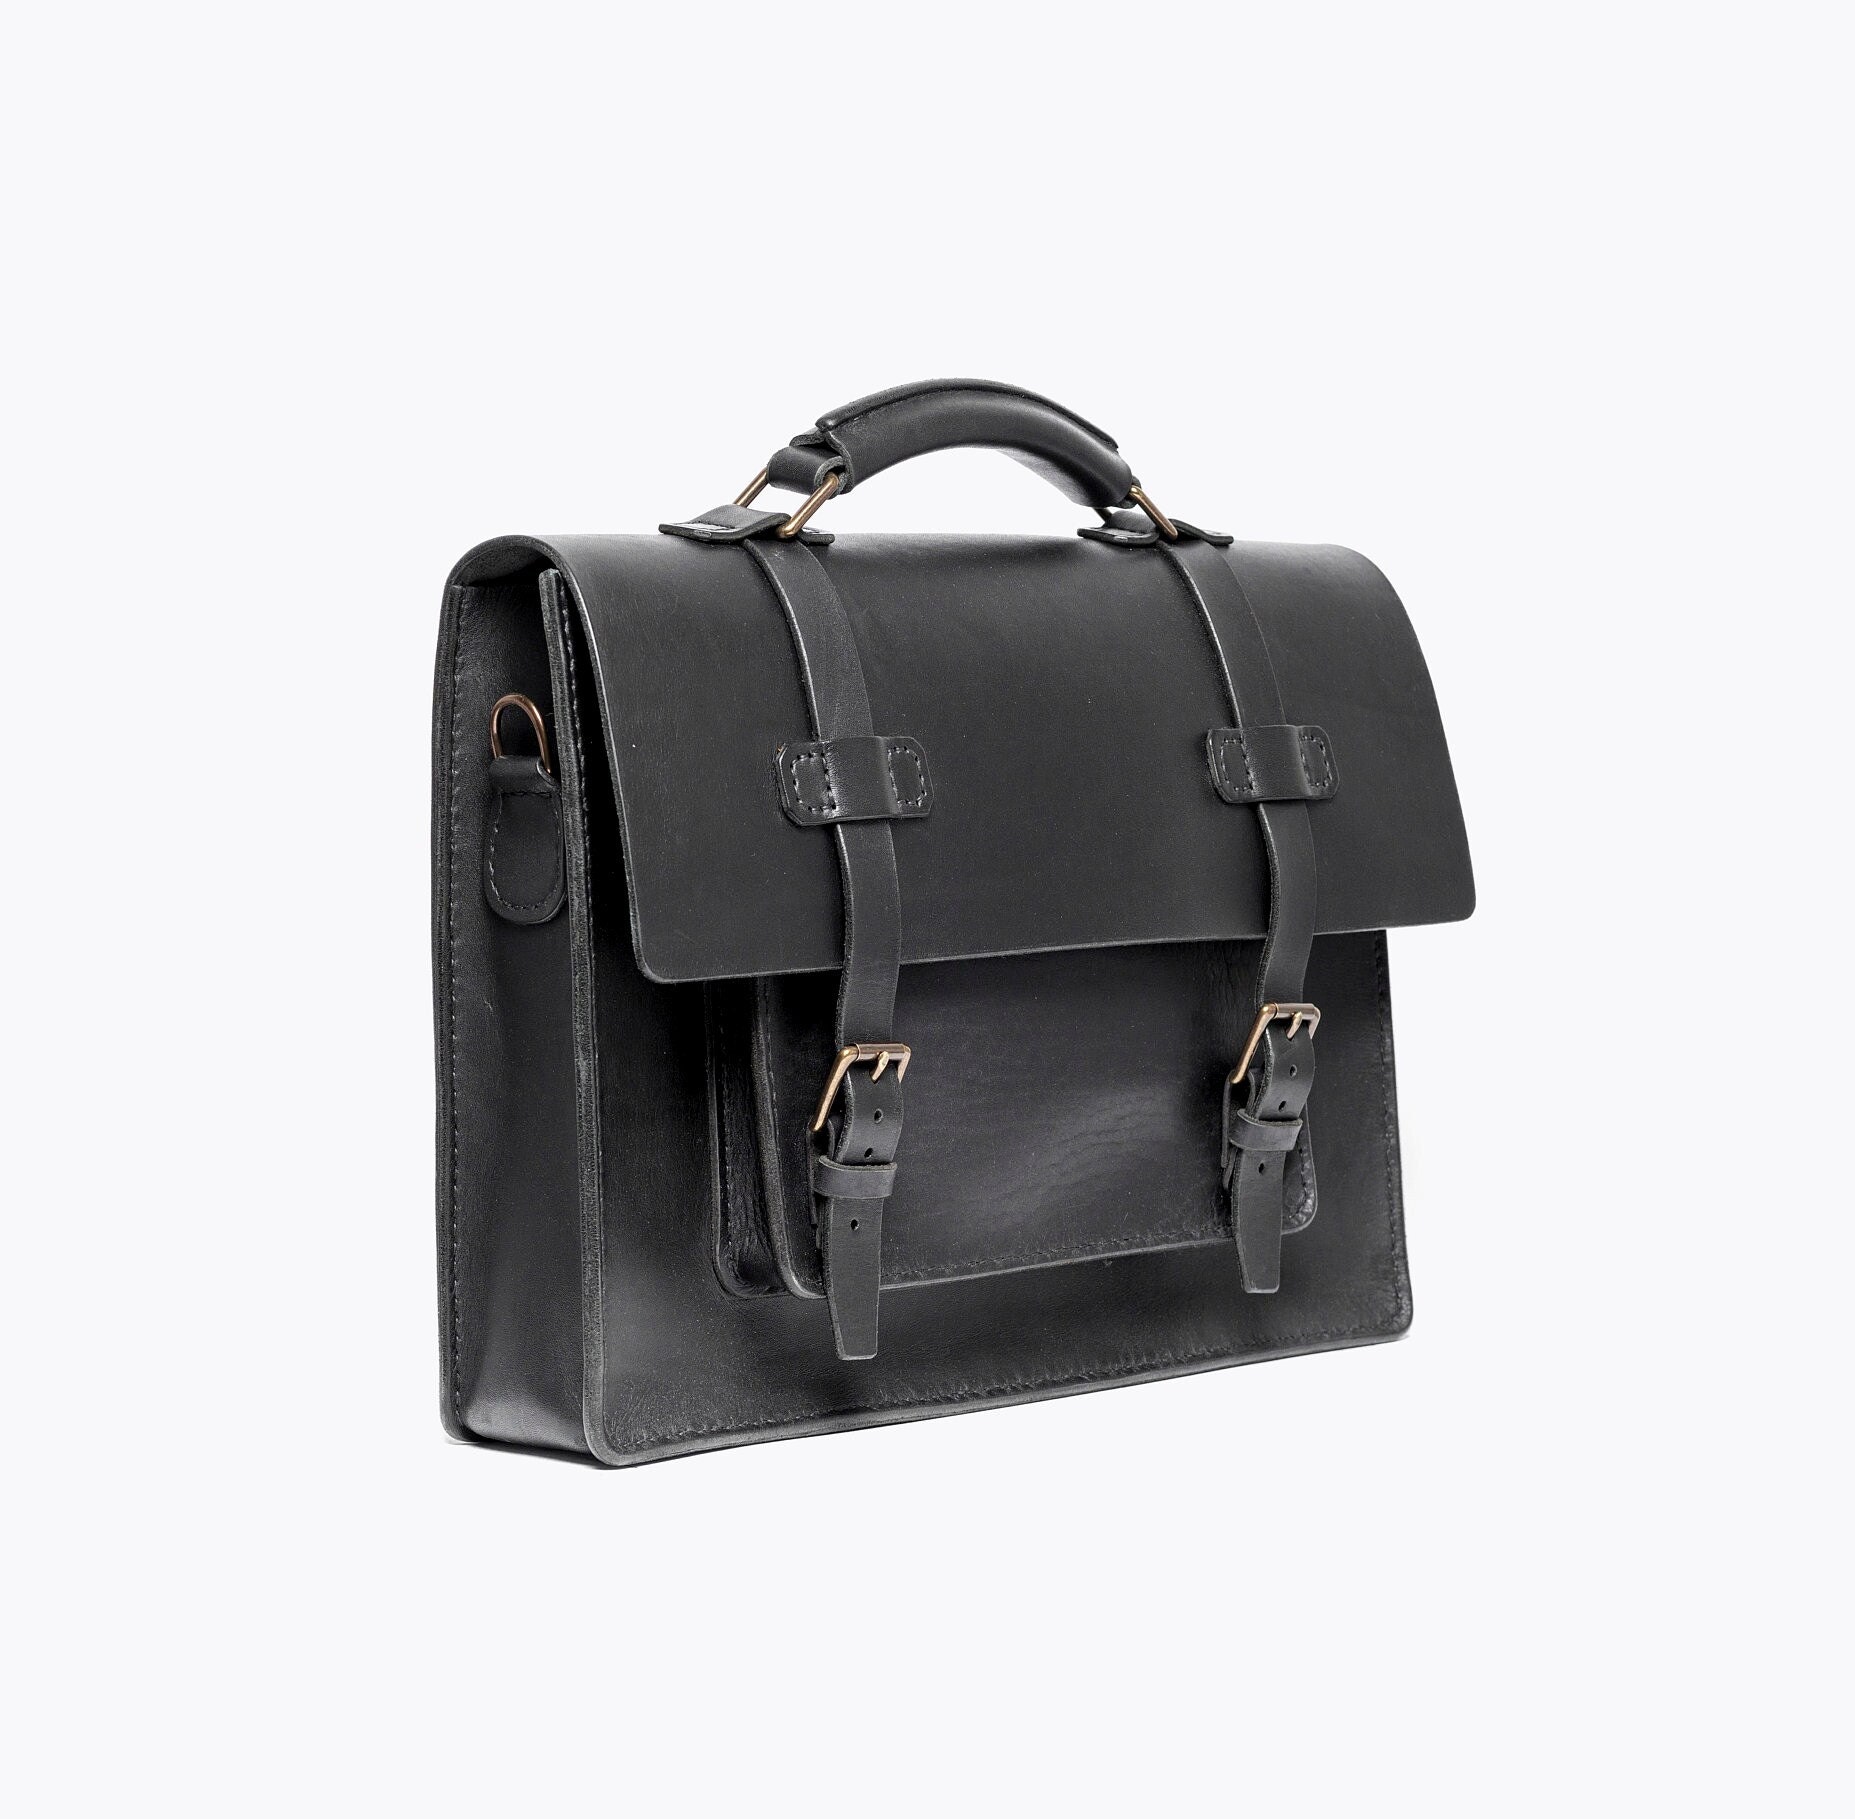 Mini Satchel Black Crossbody Bag | Cambridge Satchel Co. Black Bag | Personalised Embossing Available